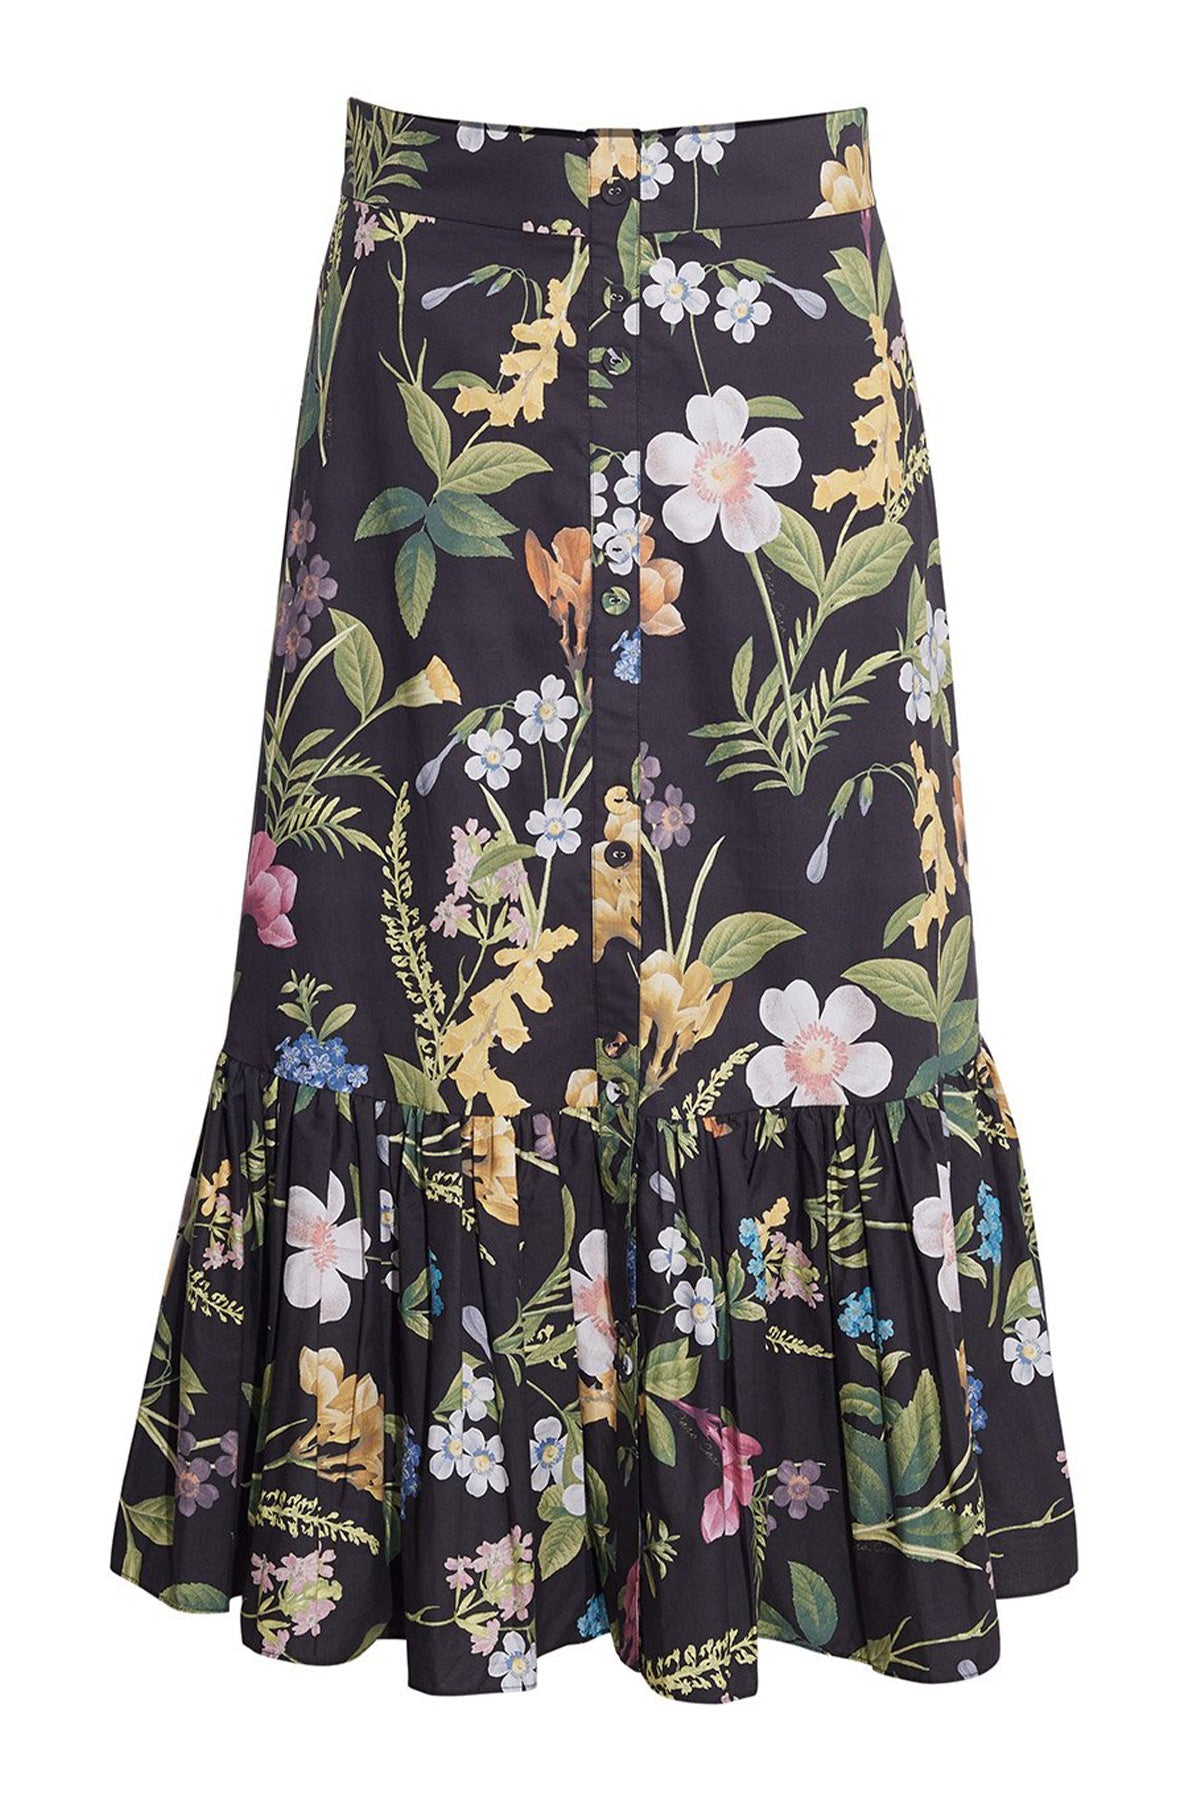 Georgica Skirt in Hudson Black - shop-olivia.com